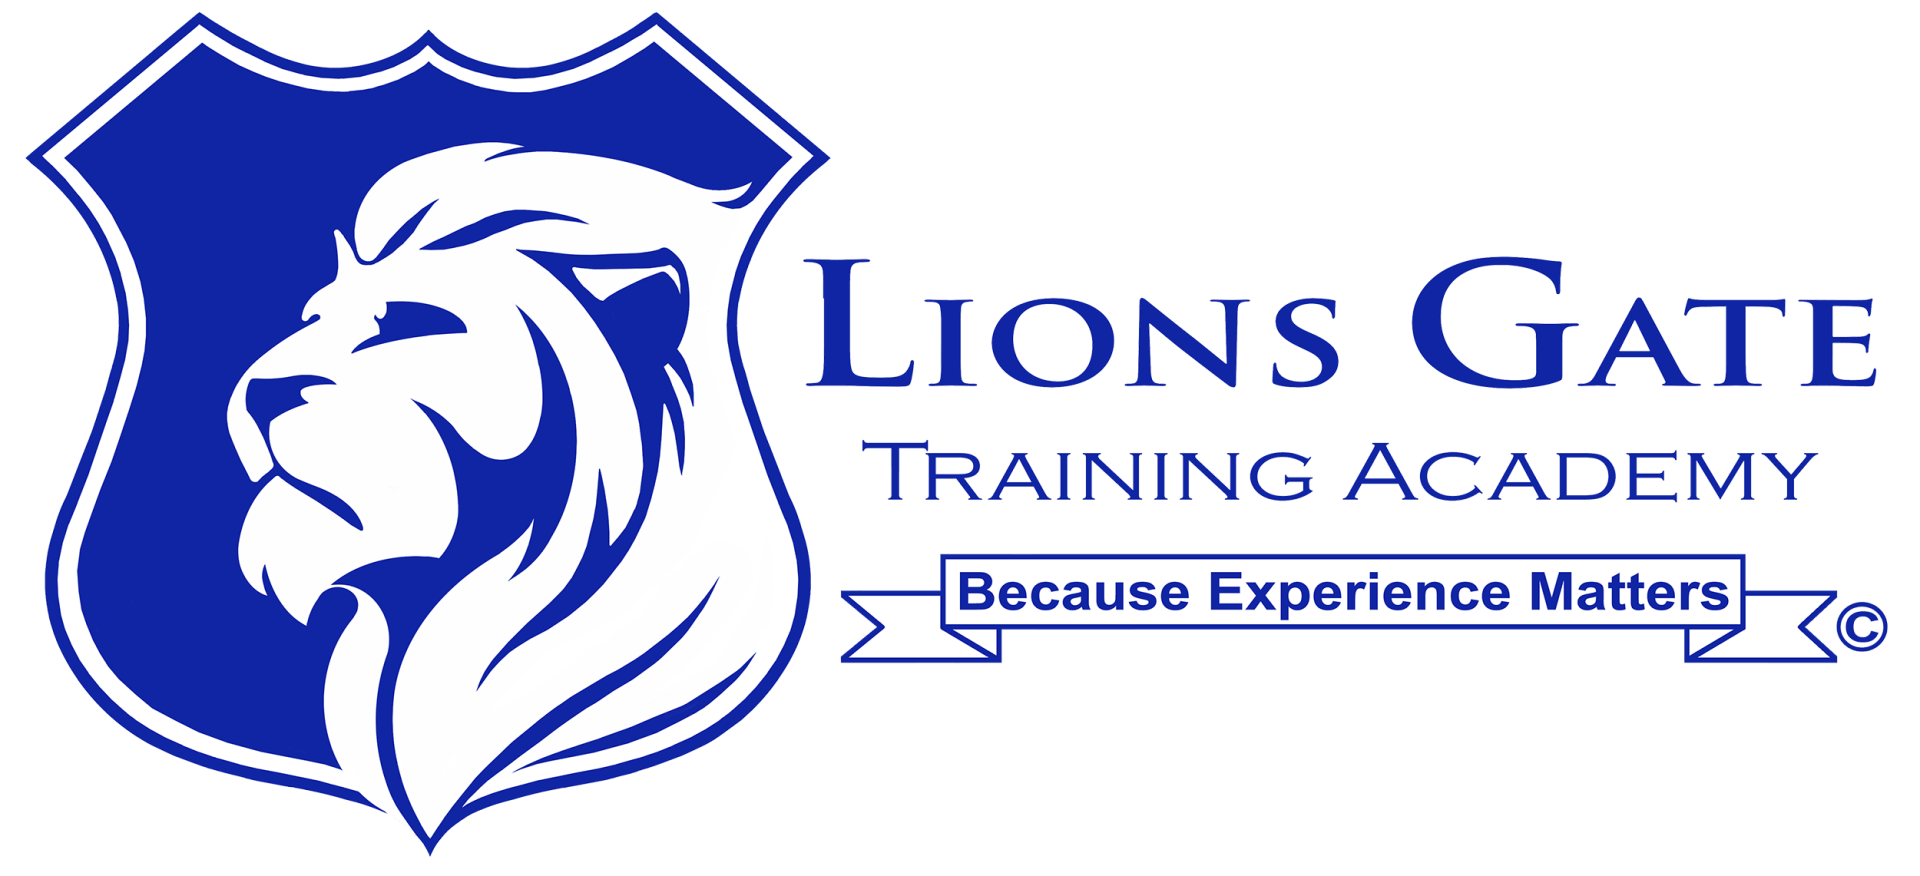 Lions Gate Training Academy Logo